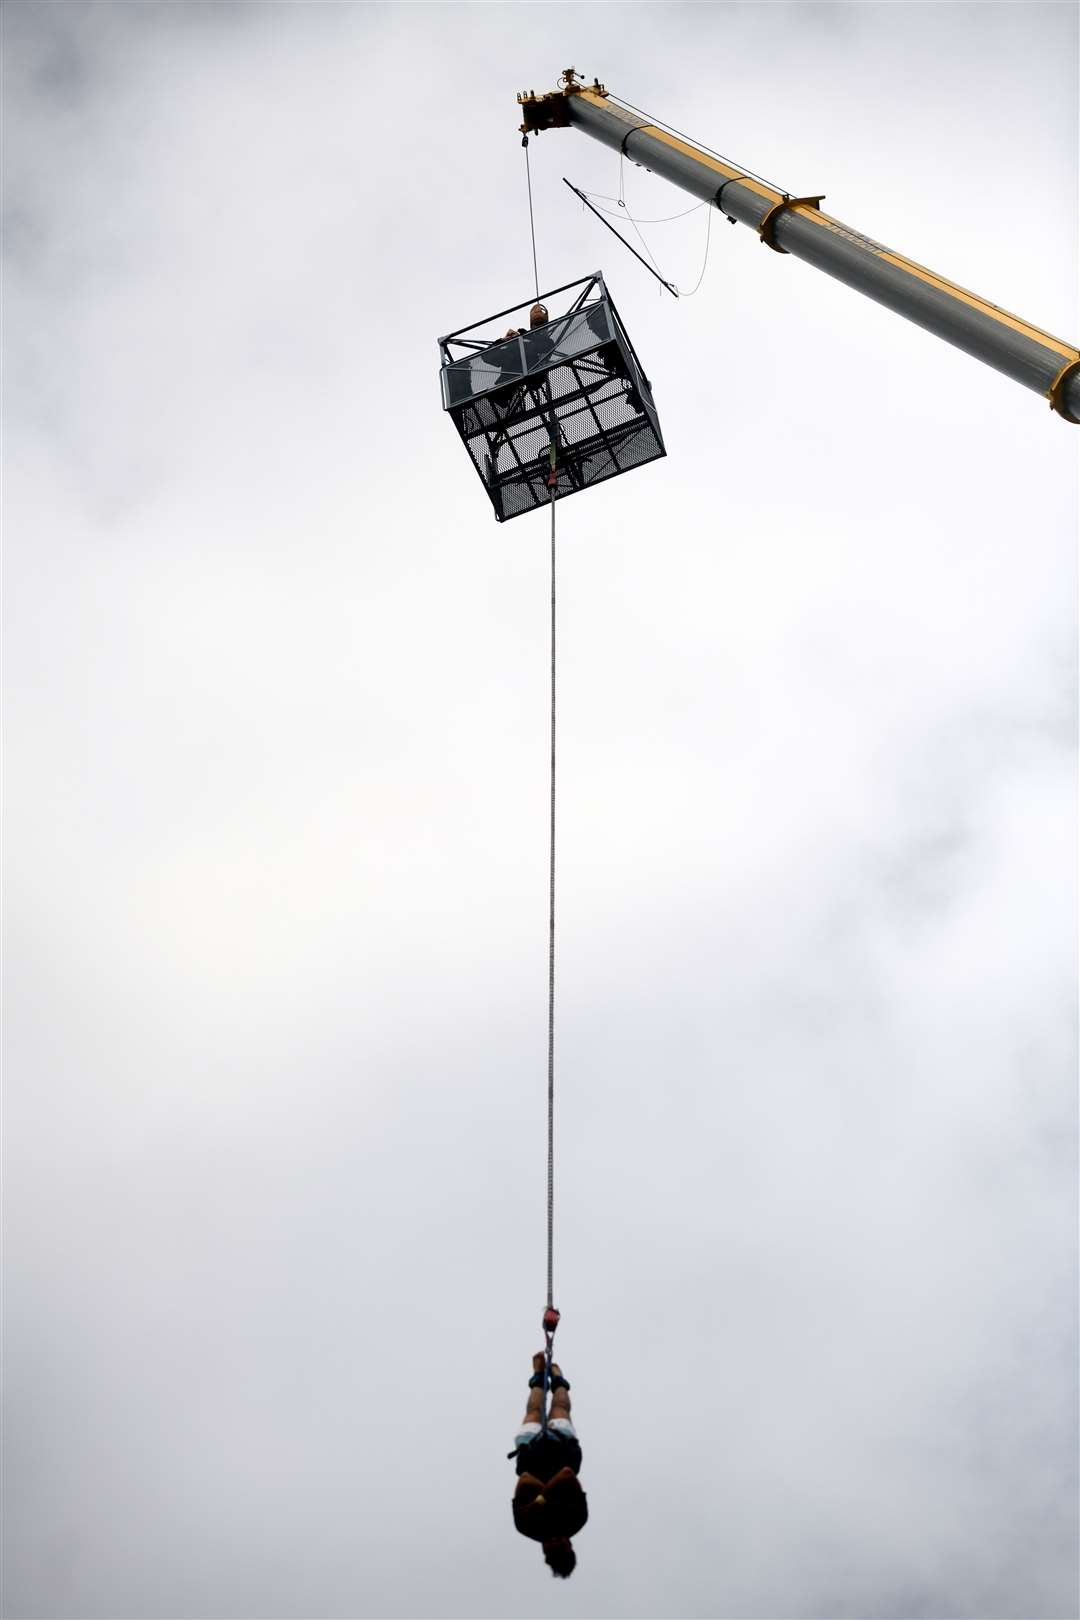 Sandeep Varma bungee jumping. Picture: James Mackenzie.